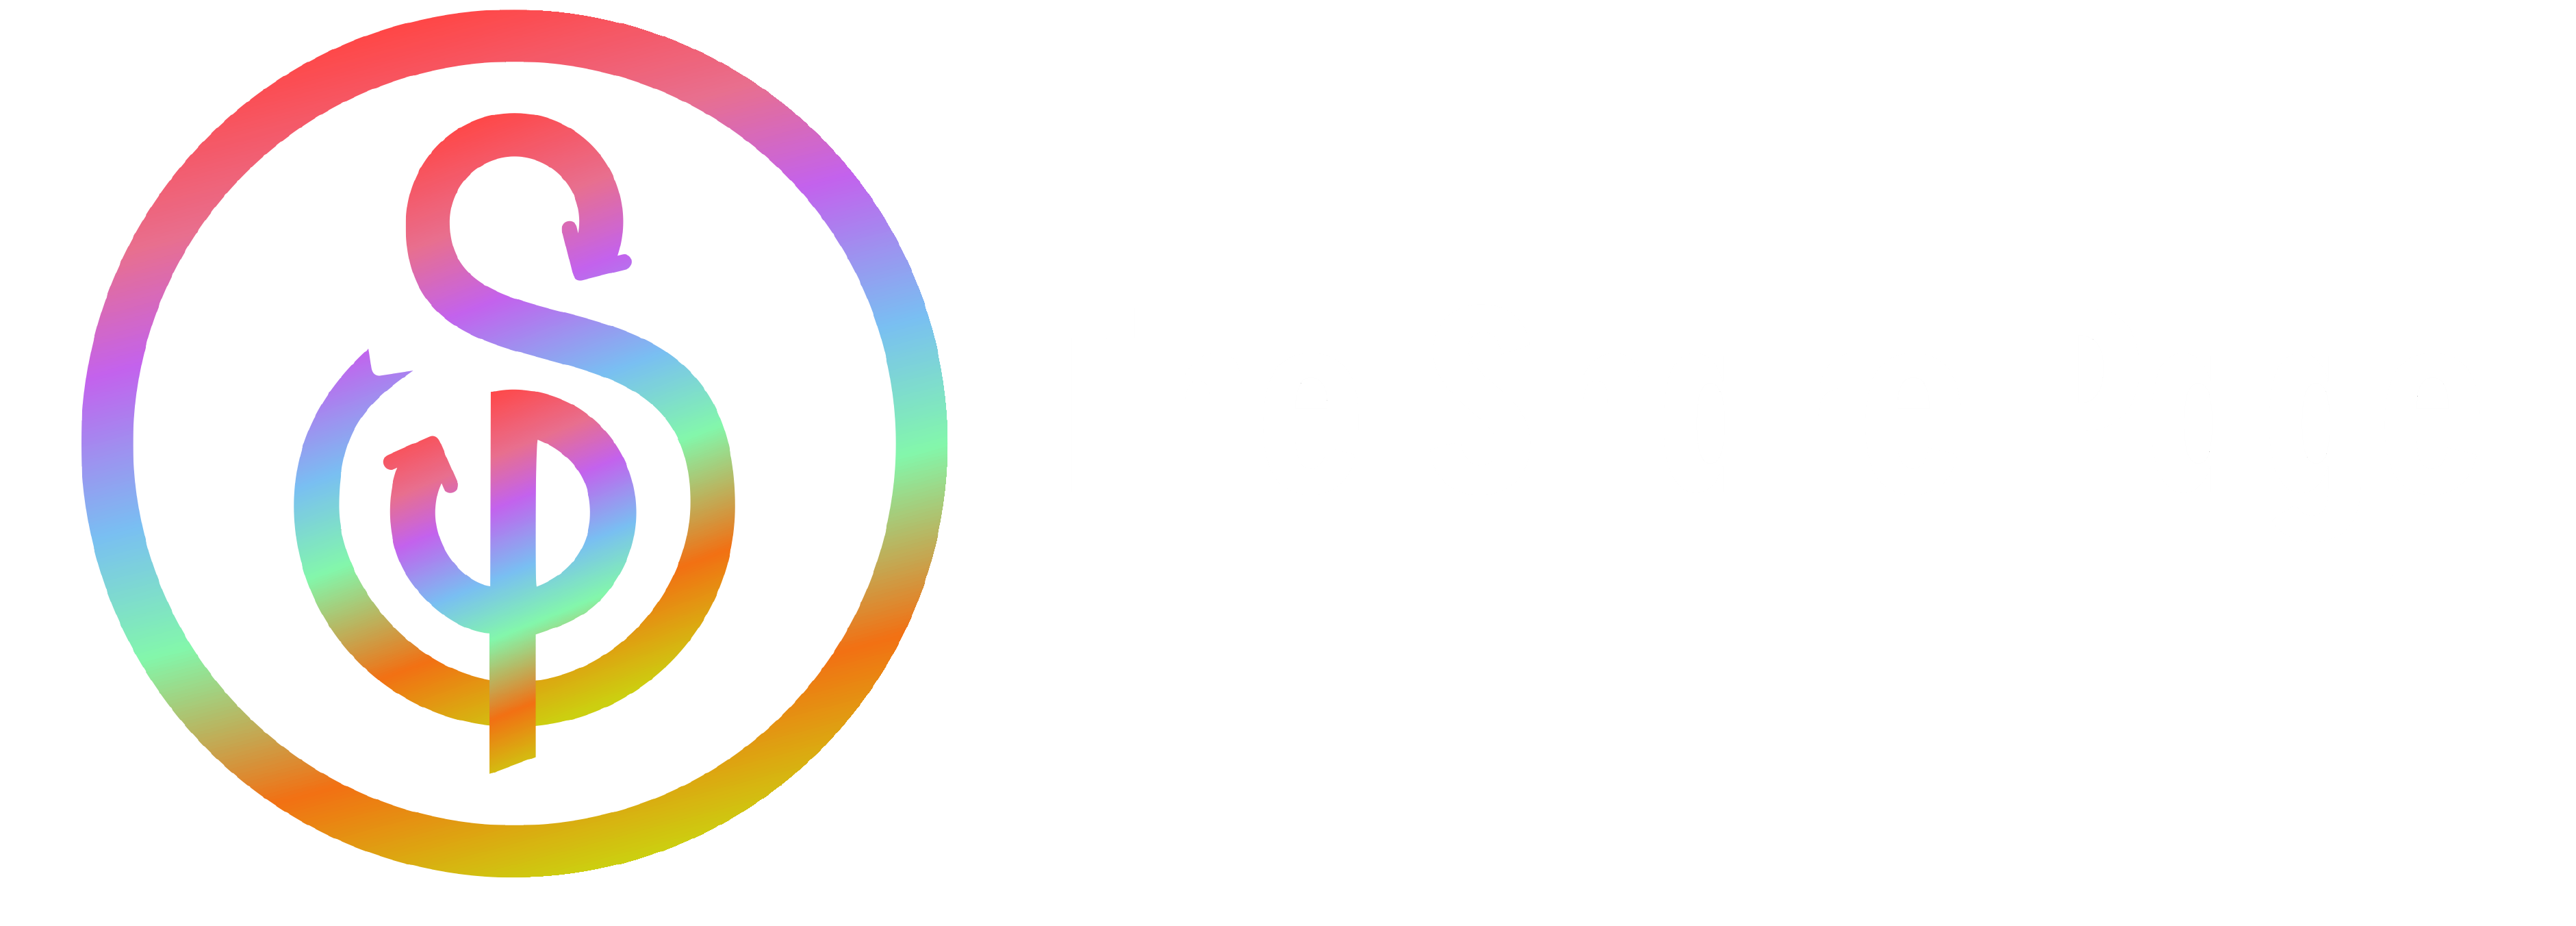 The SharePage